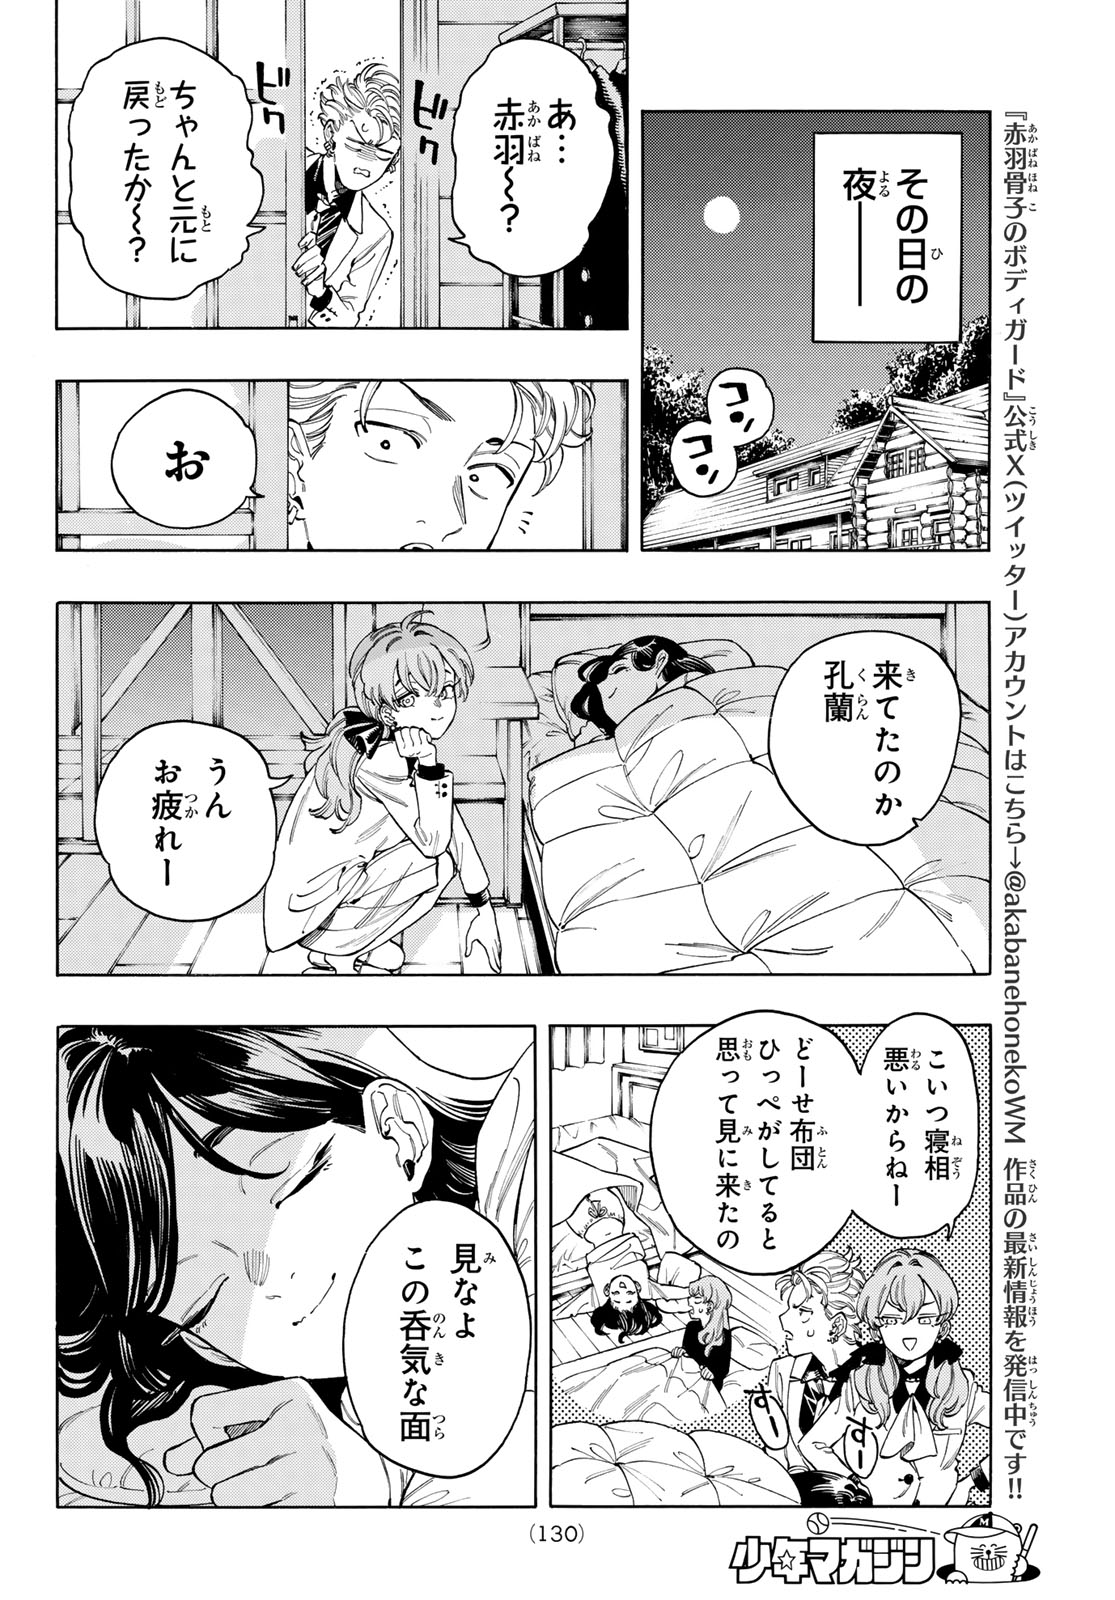 Akabane Honeko no Bodyguard - Chapter 87 - Page 19